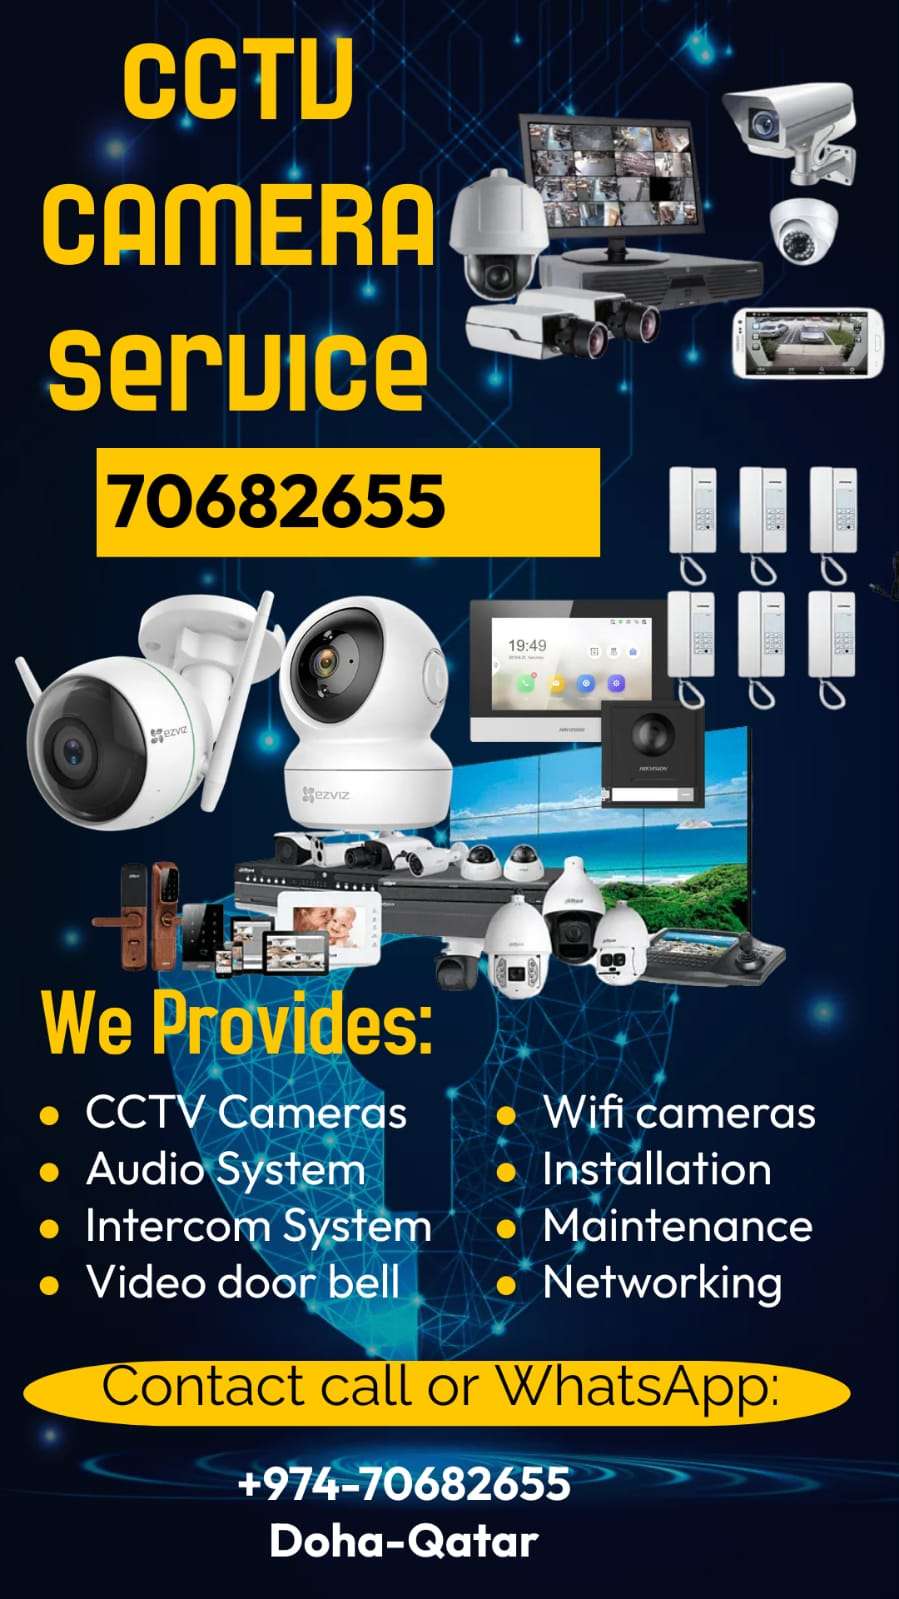 CCTV Cameras installation and maintenance